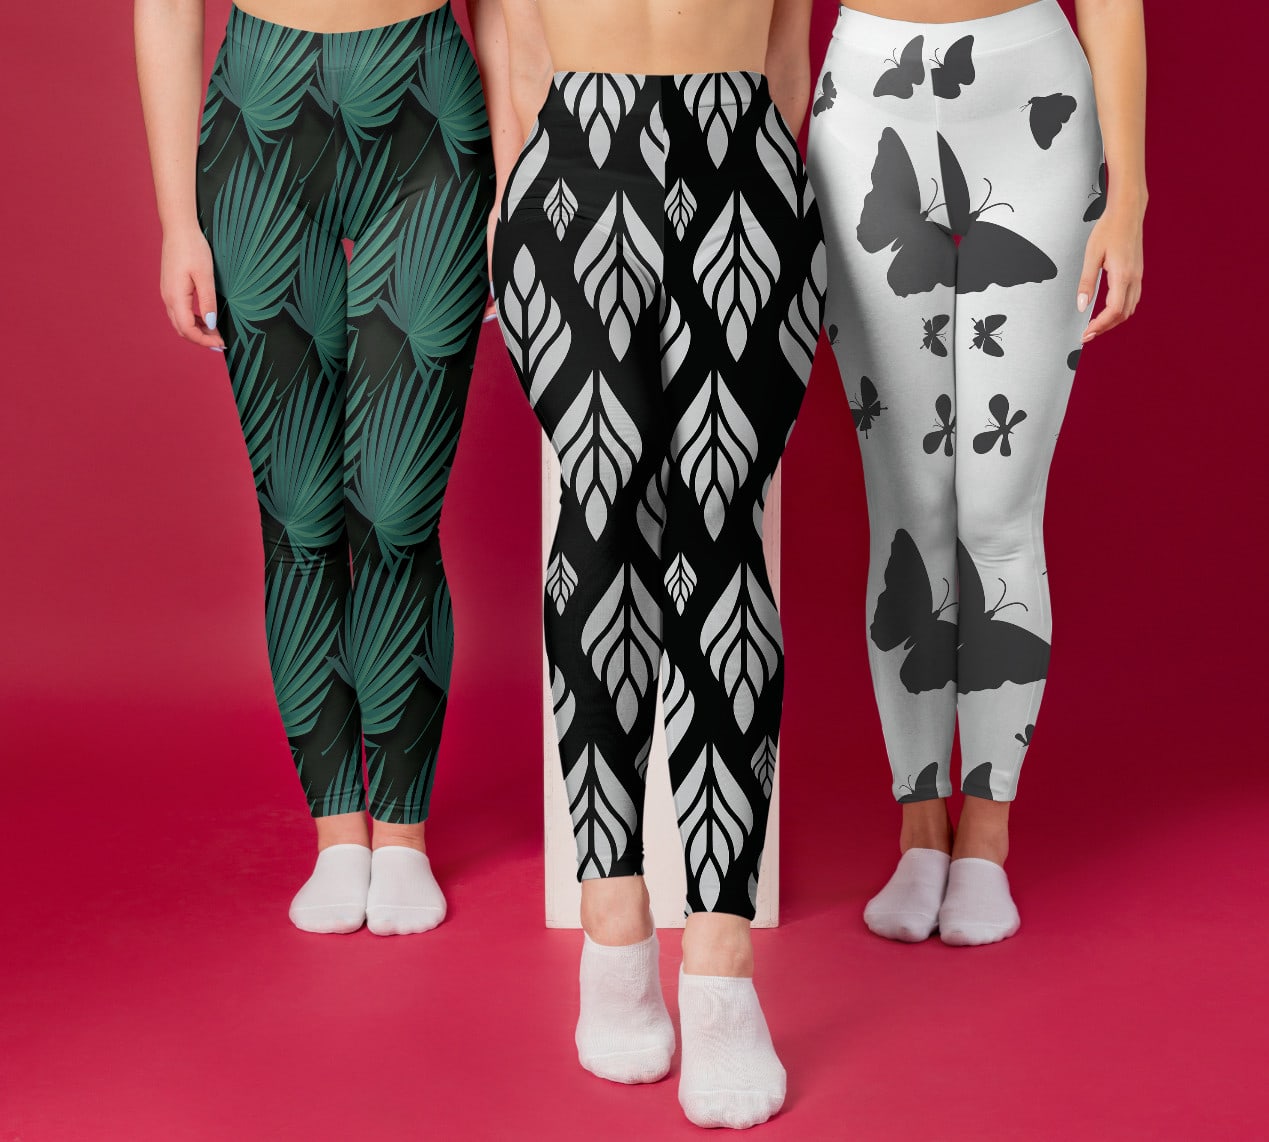 Design unique trendy leggings seamless patterns by Iamhamnanadeem